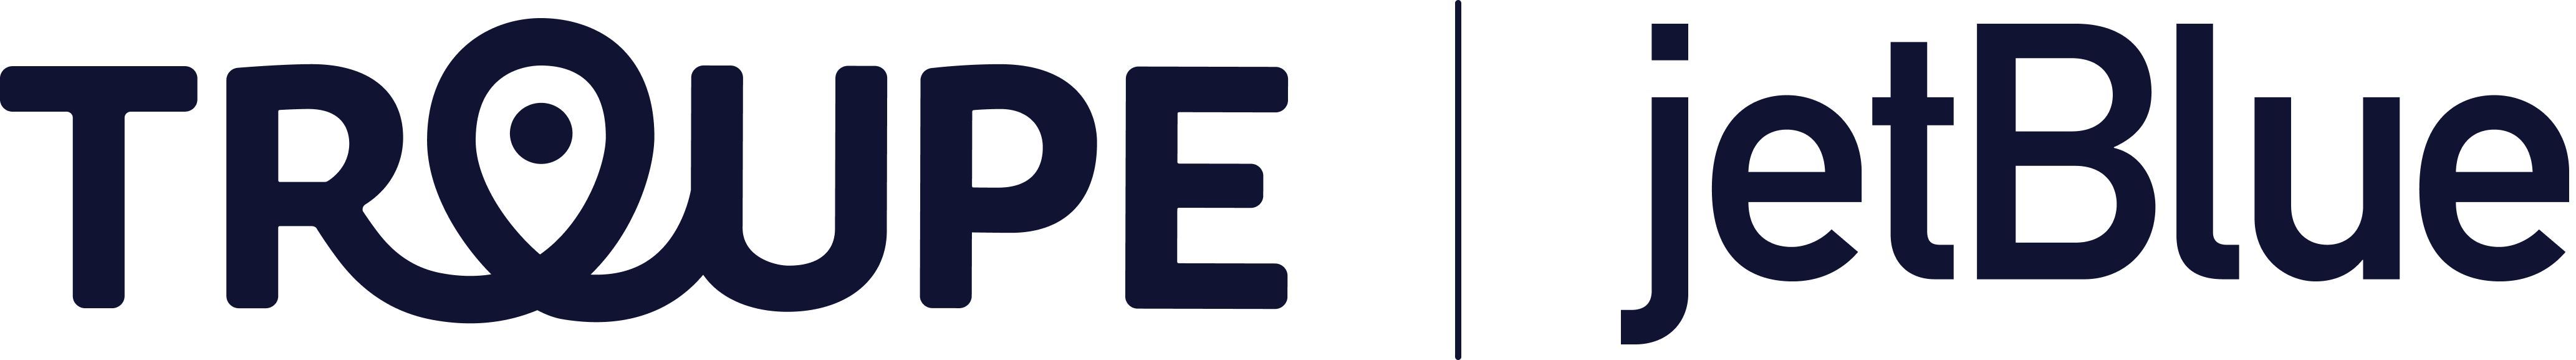 Troupe and Jetblue logo